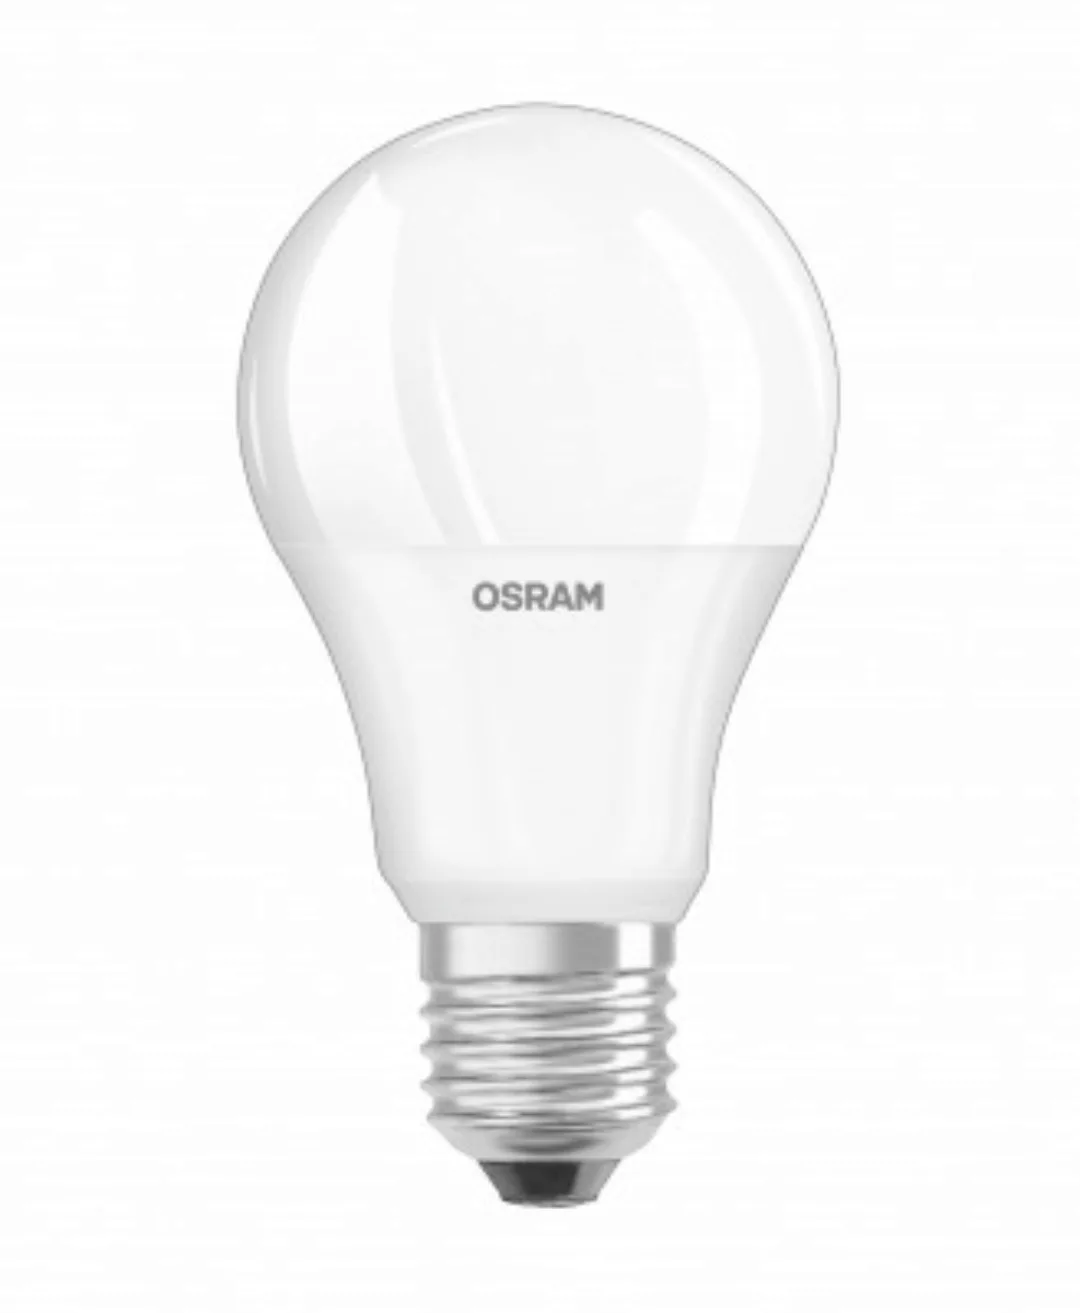 OSRAM LED SUPERSTAR CLASSIC A 75 BLI K DIM Warmweiß SMD Matt E27 Glühlampe günstig online kaufen